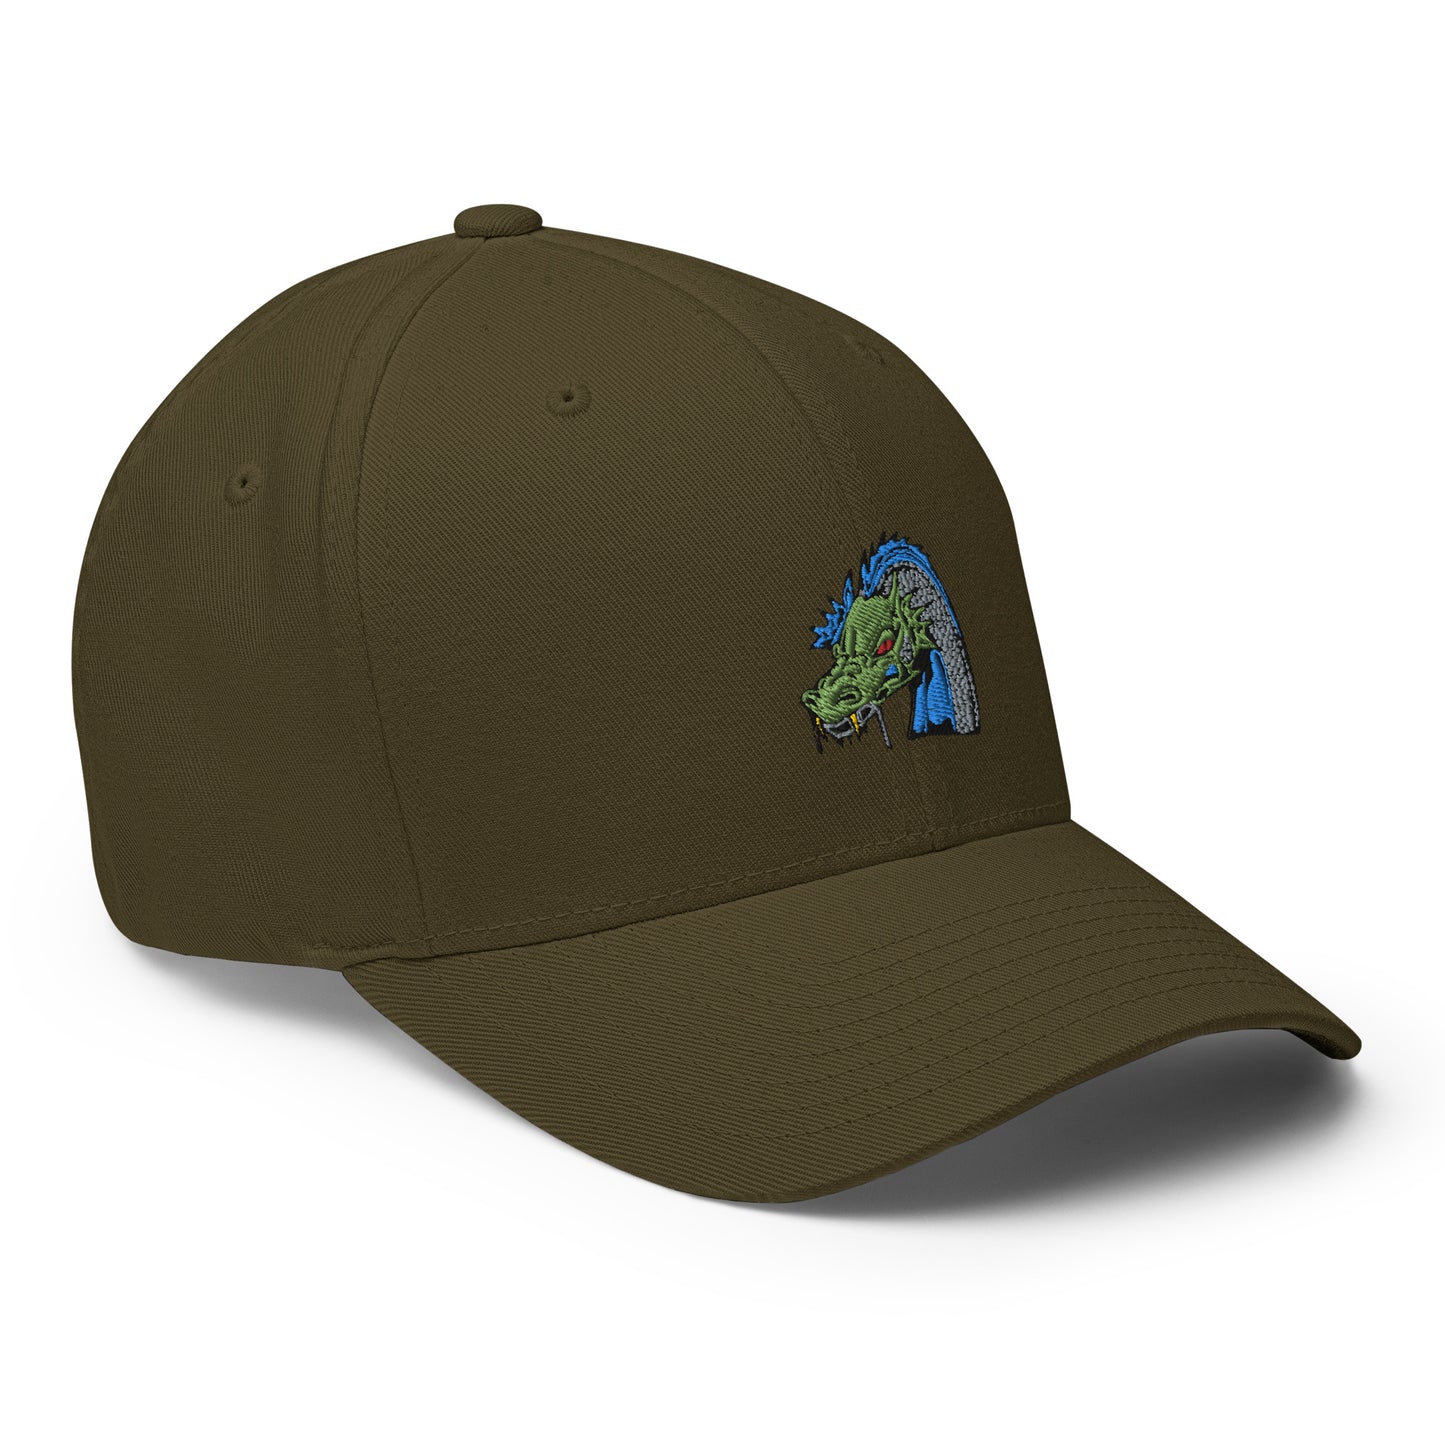 Baseball Cap with Green Dragon Symbol